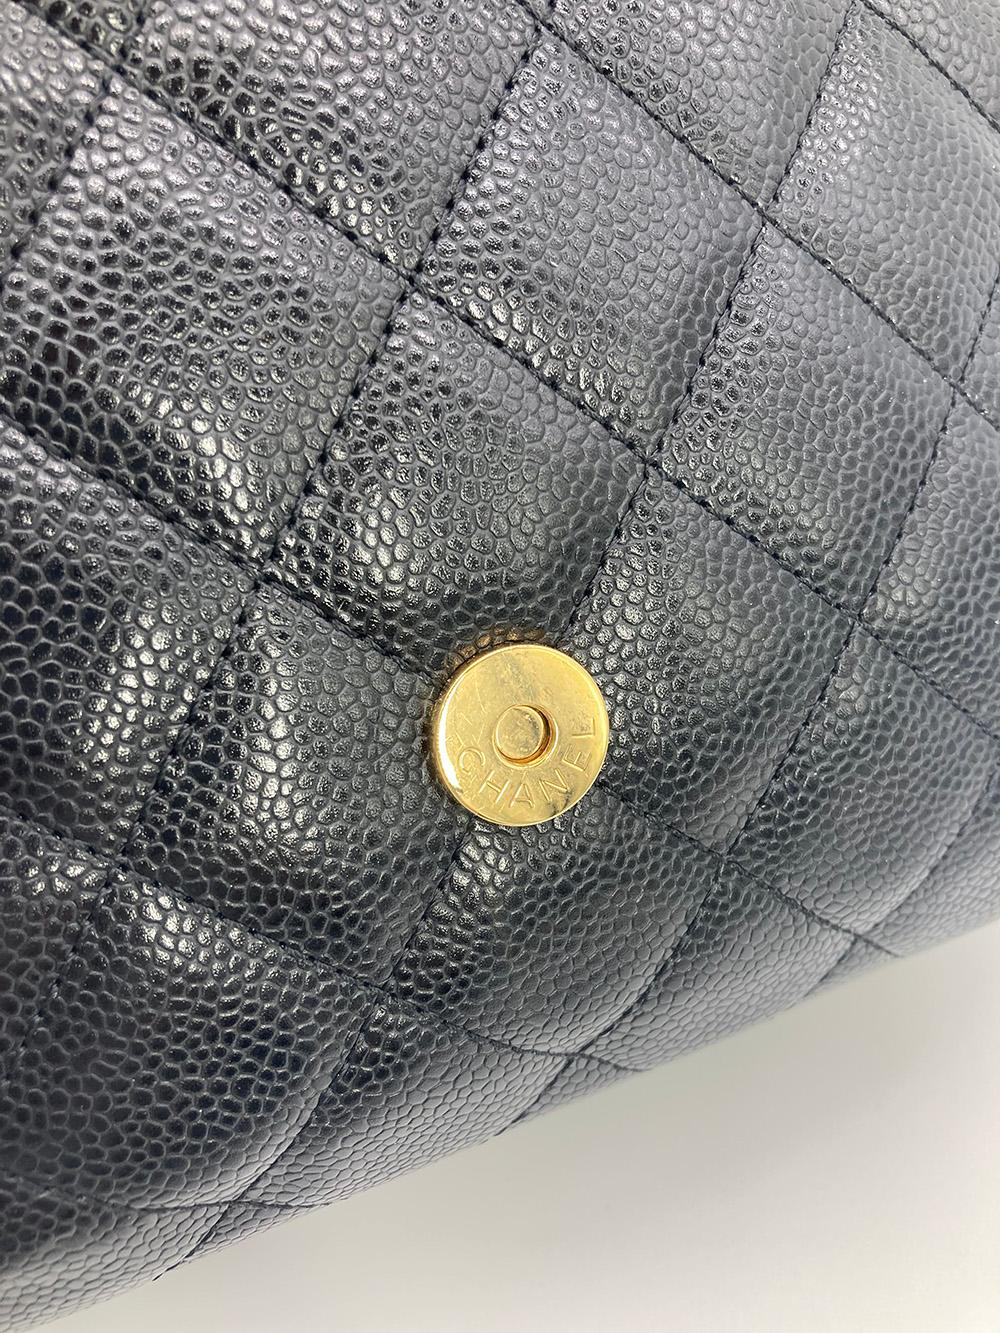 chanel caviar quilted timeless cc shoulder bag black